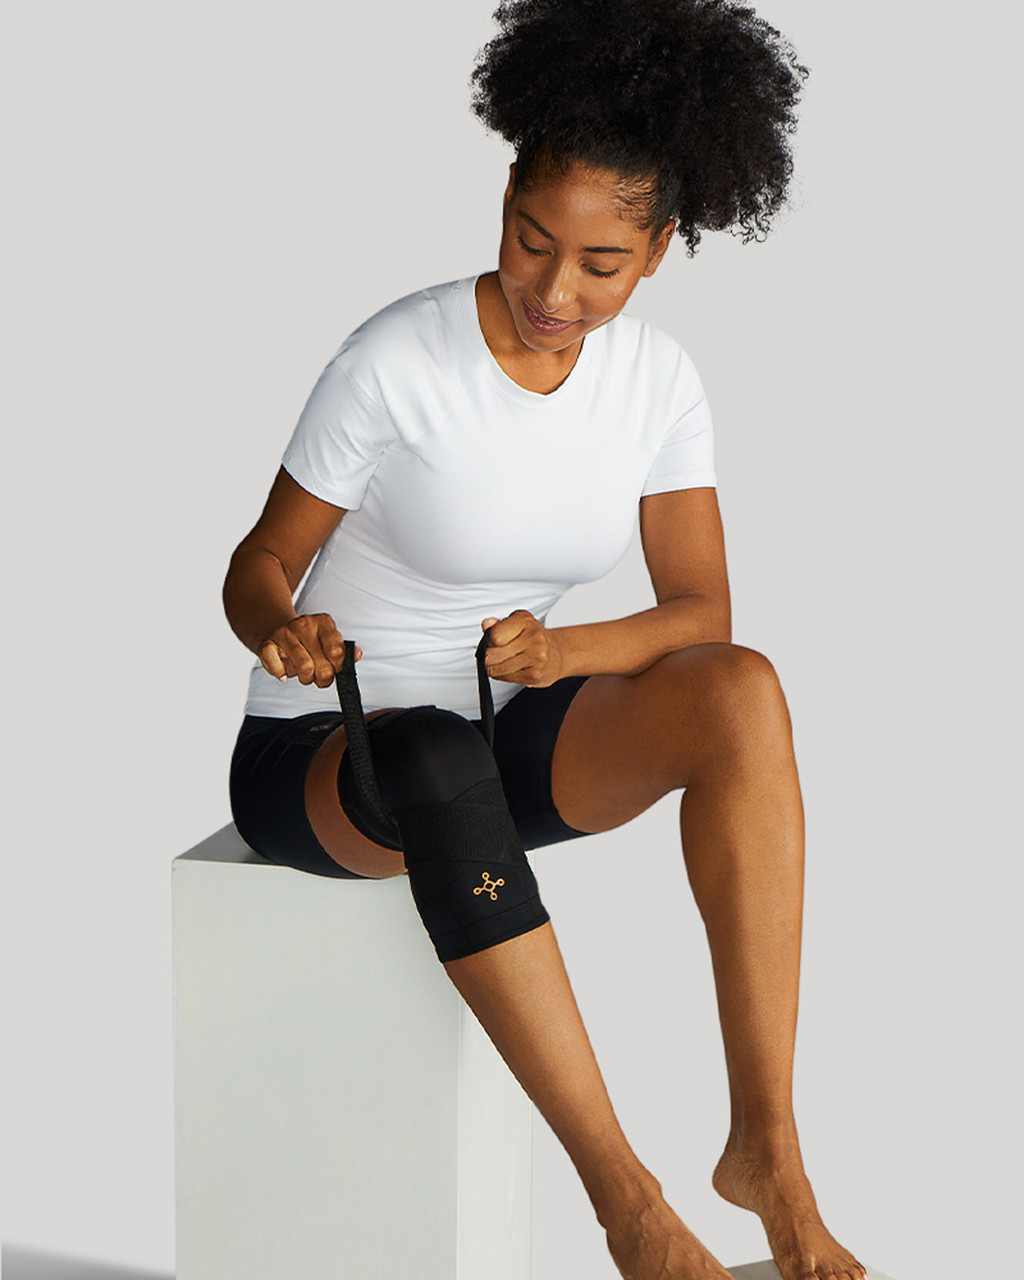 Women's Pro-Grade Adjustable Support Compression Knee Sleeve